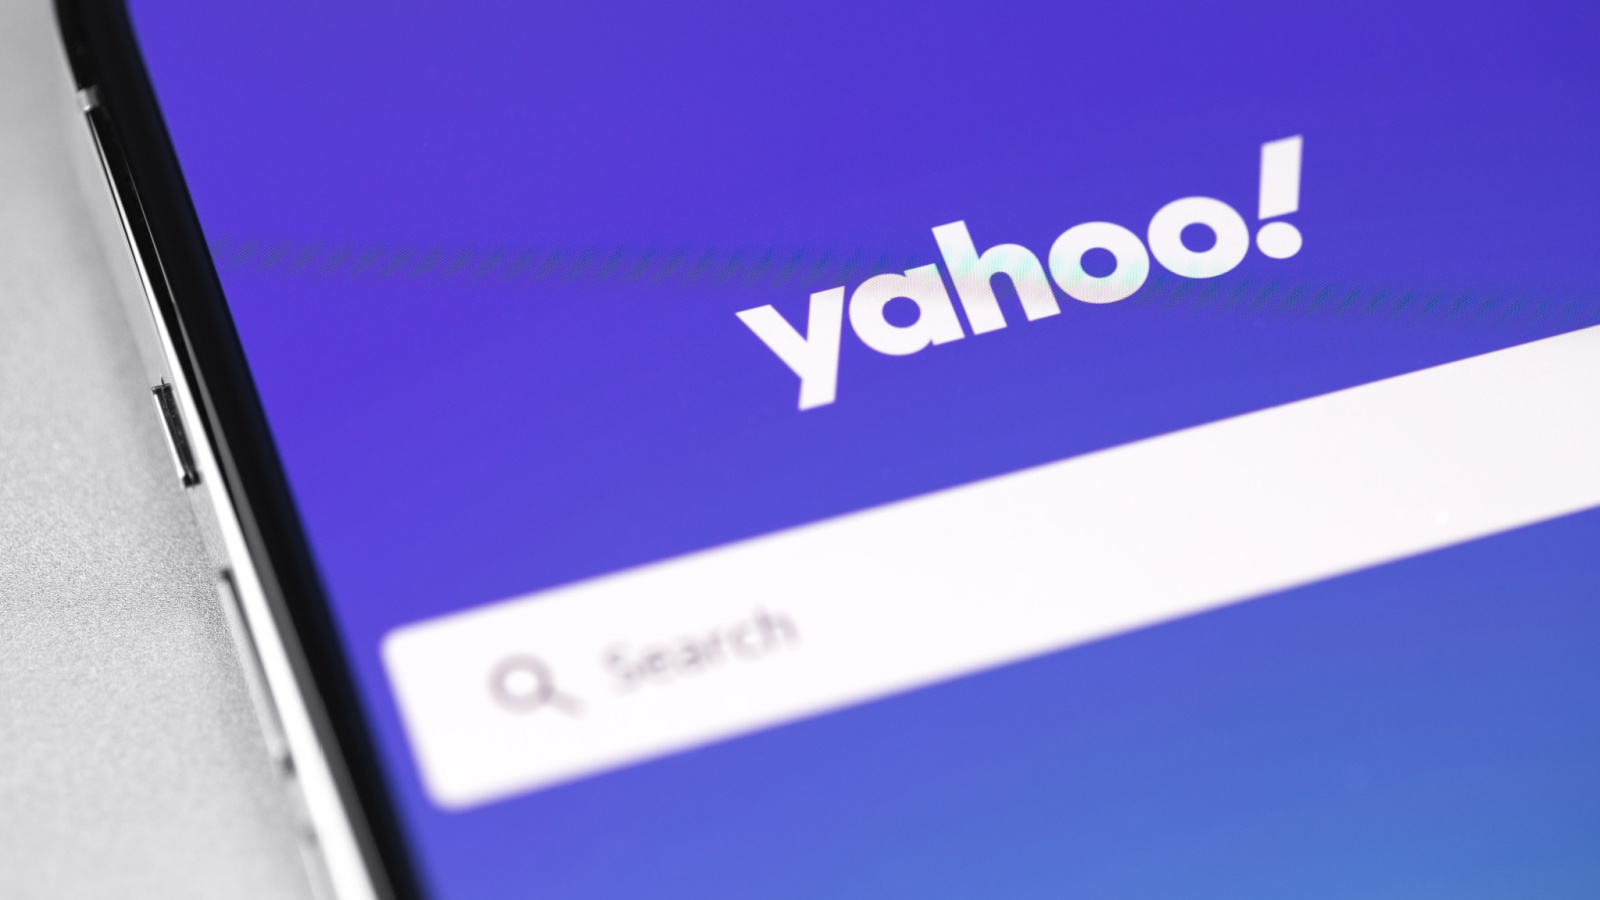 Yahoo! logo displayed on smartphone with purple-blue background